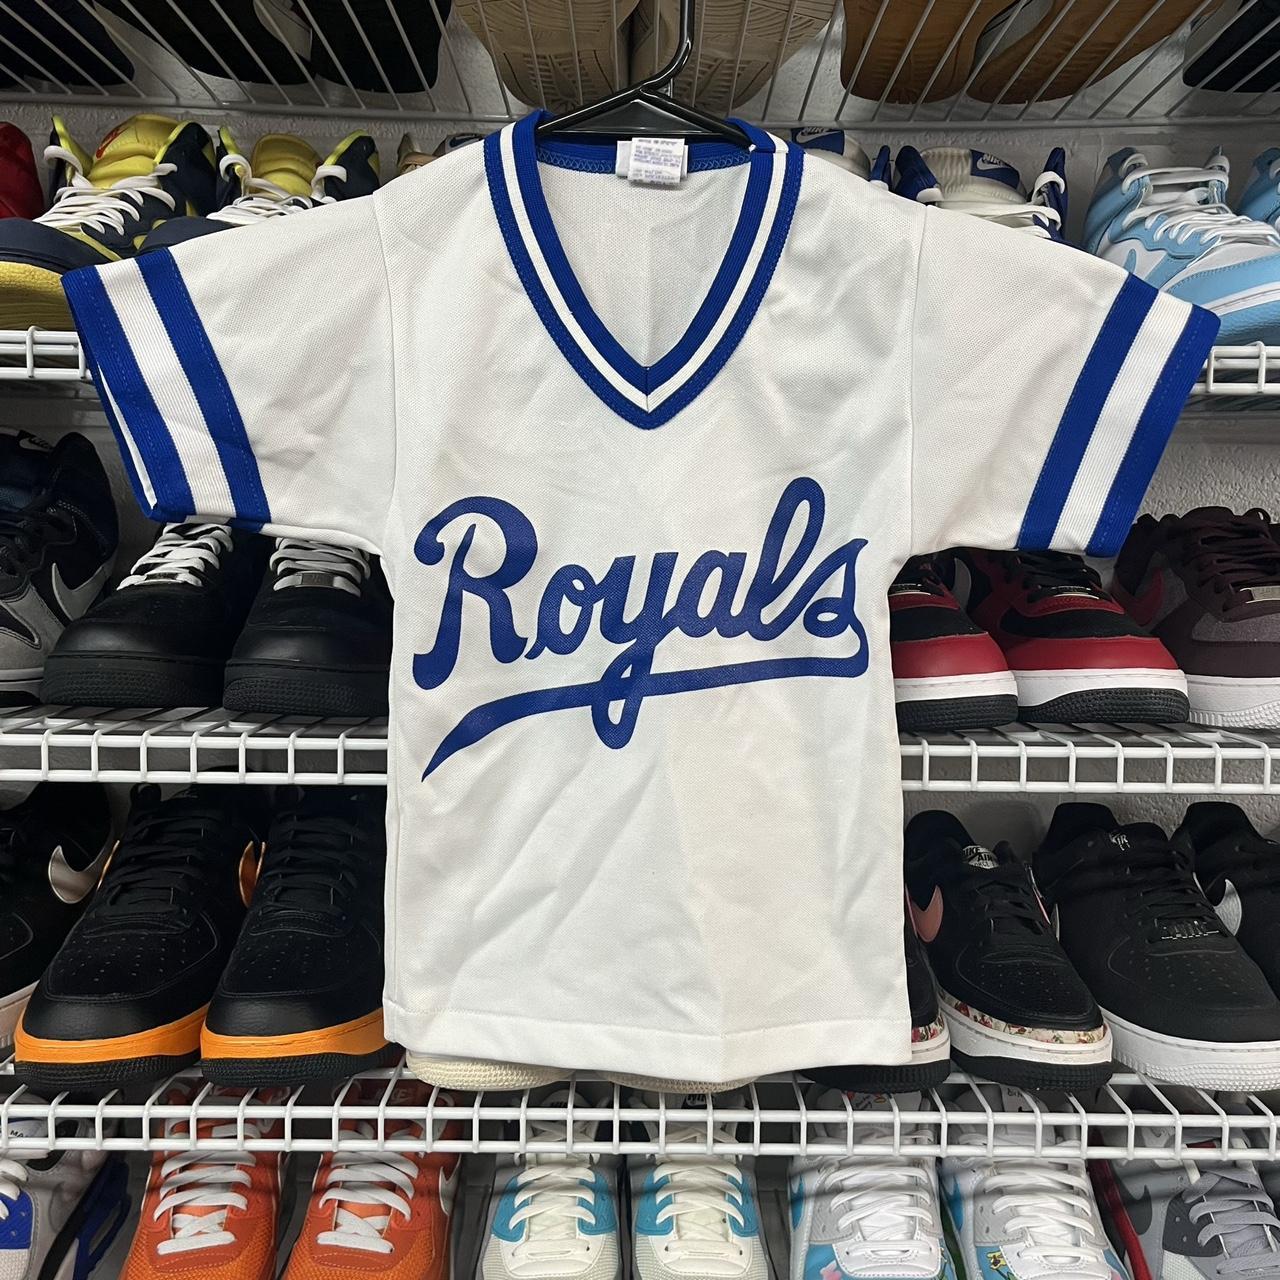 Vintage Kansas City Royals jersey